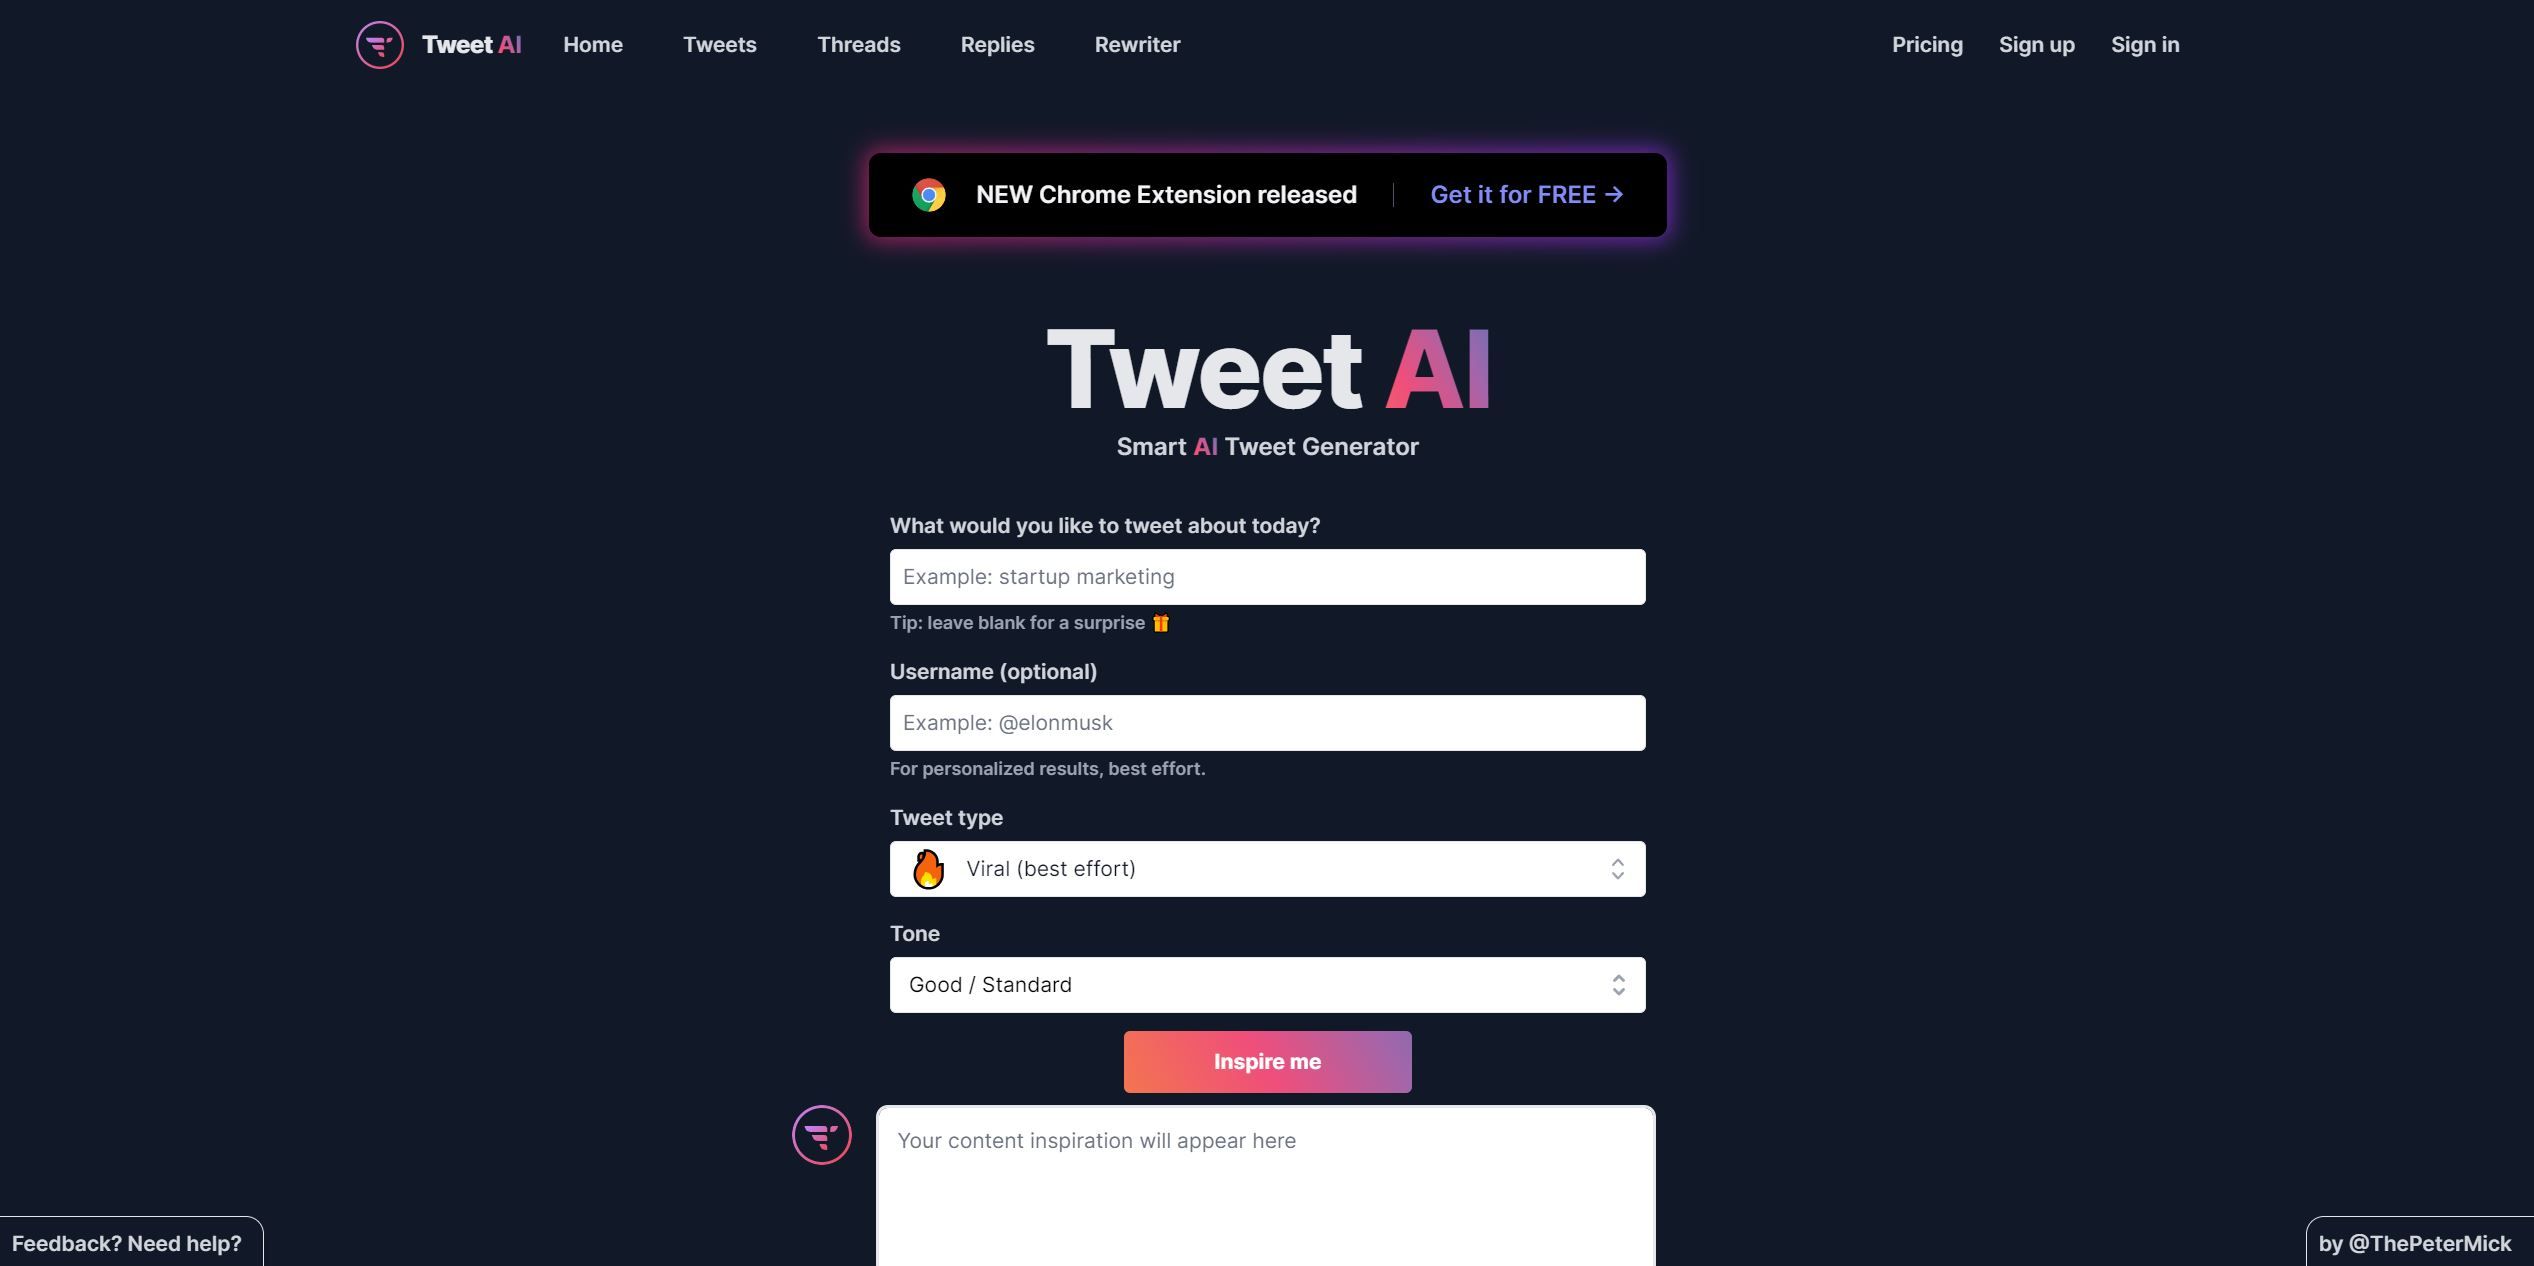 TweetAITweetAI helps users create inspiring and engaging tweets with AI